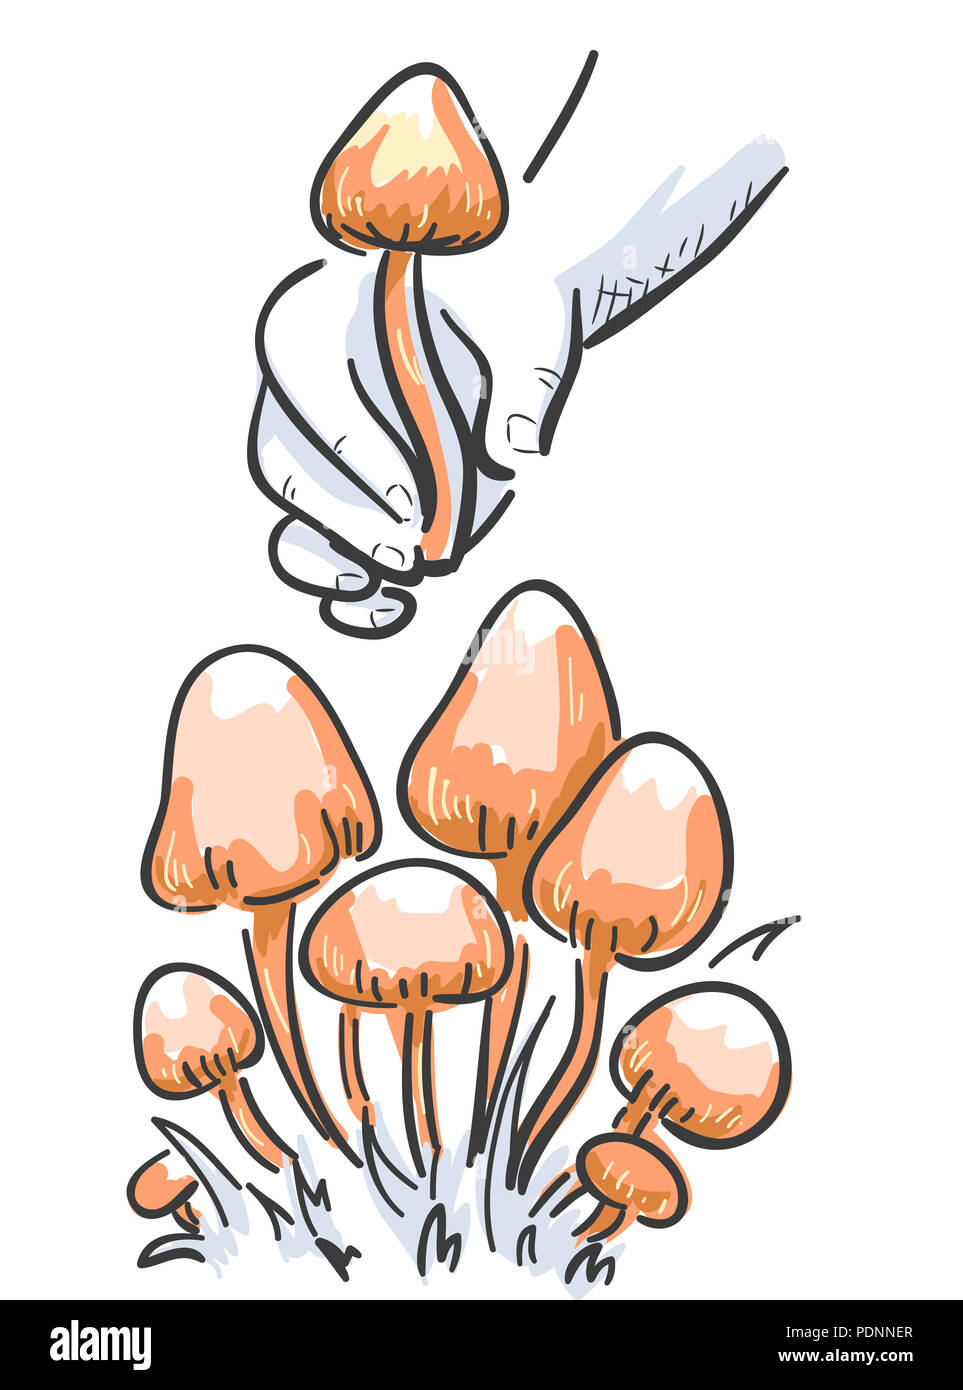 Illustration of a Hand Picking a Magic Mushroom Stock Photo